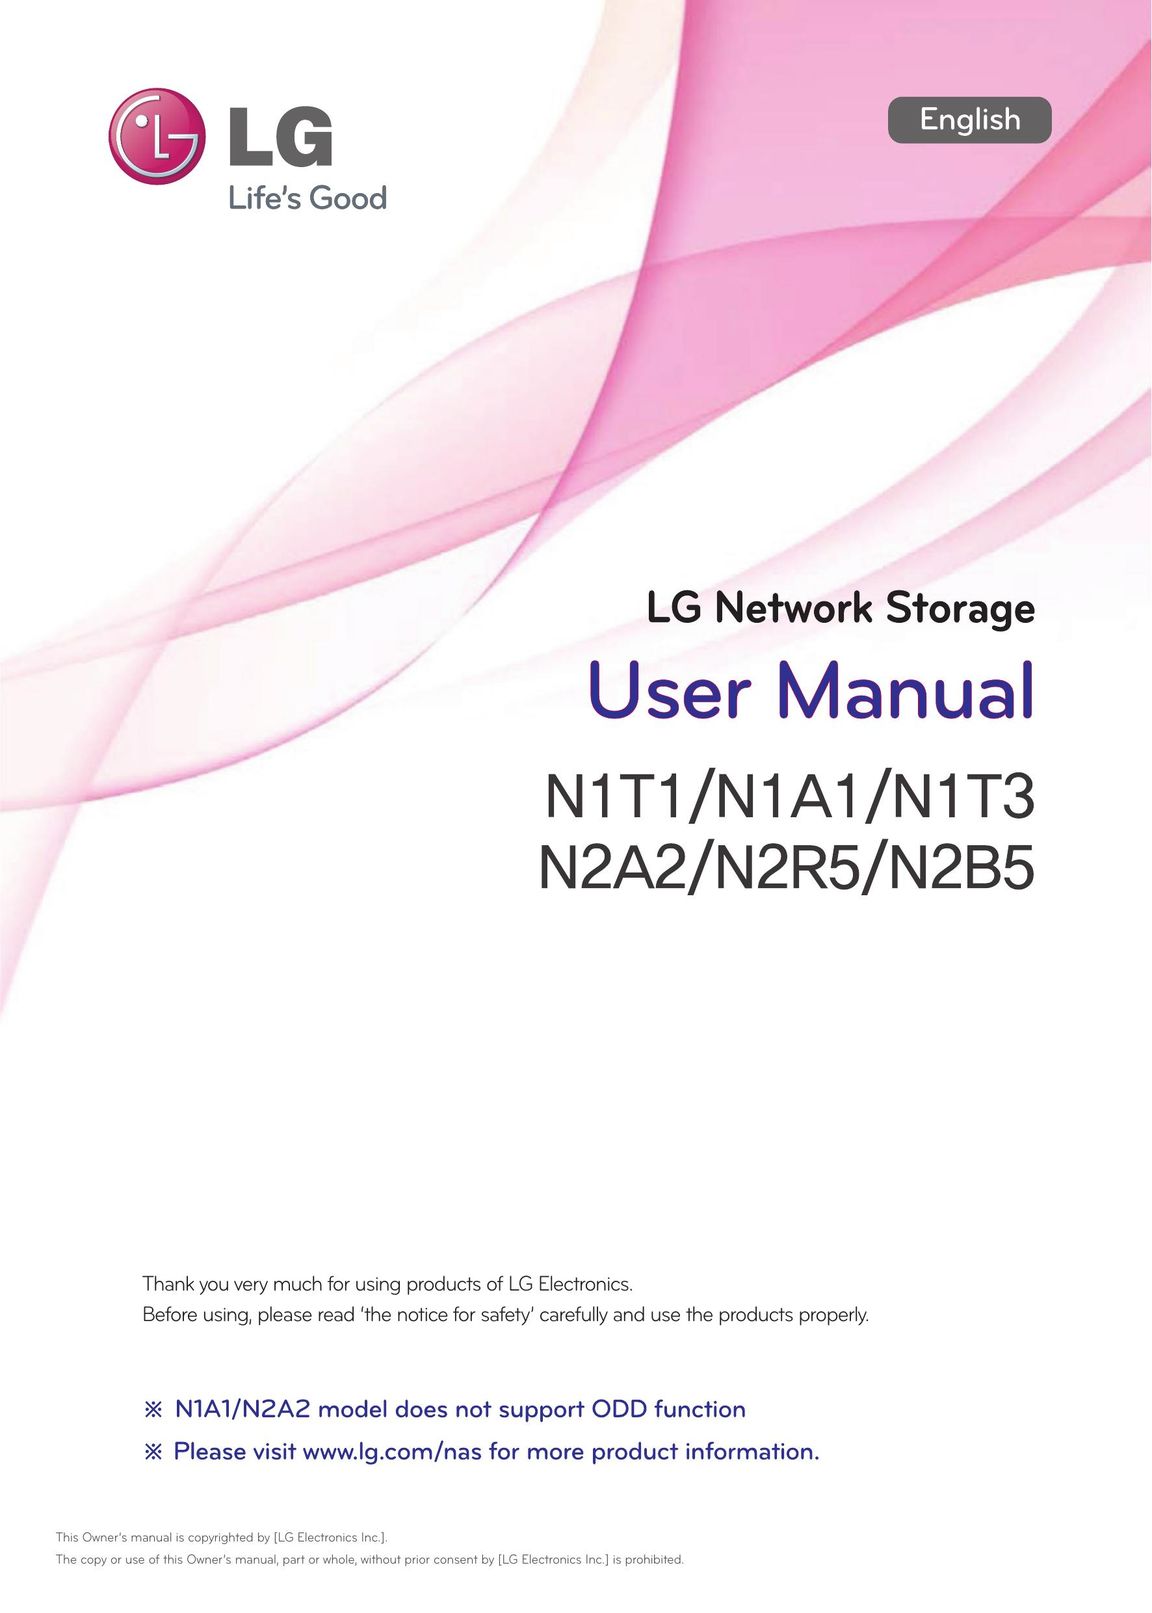 LG Electronics N1T3 Network Hardware User Manual